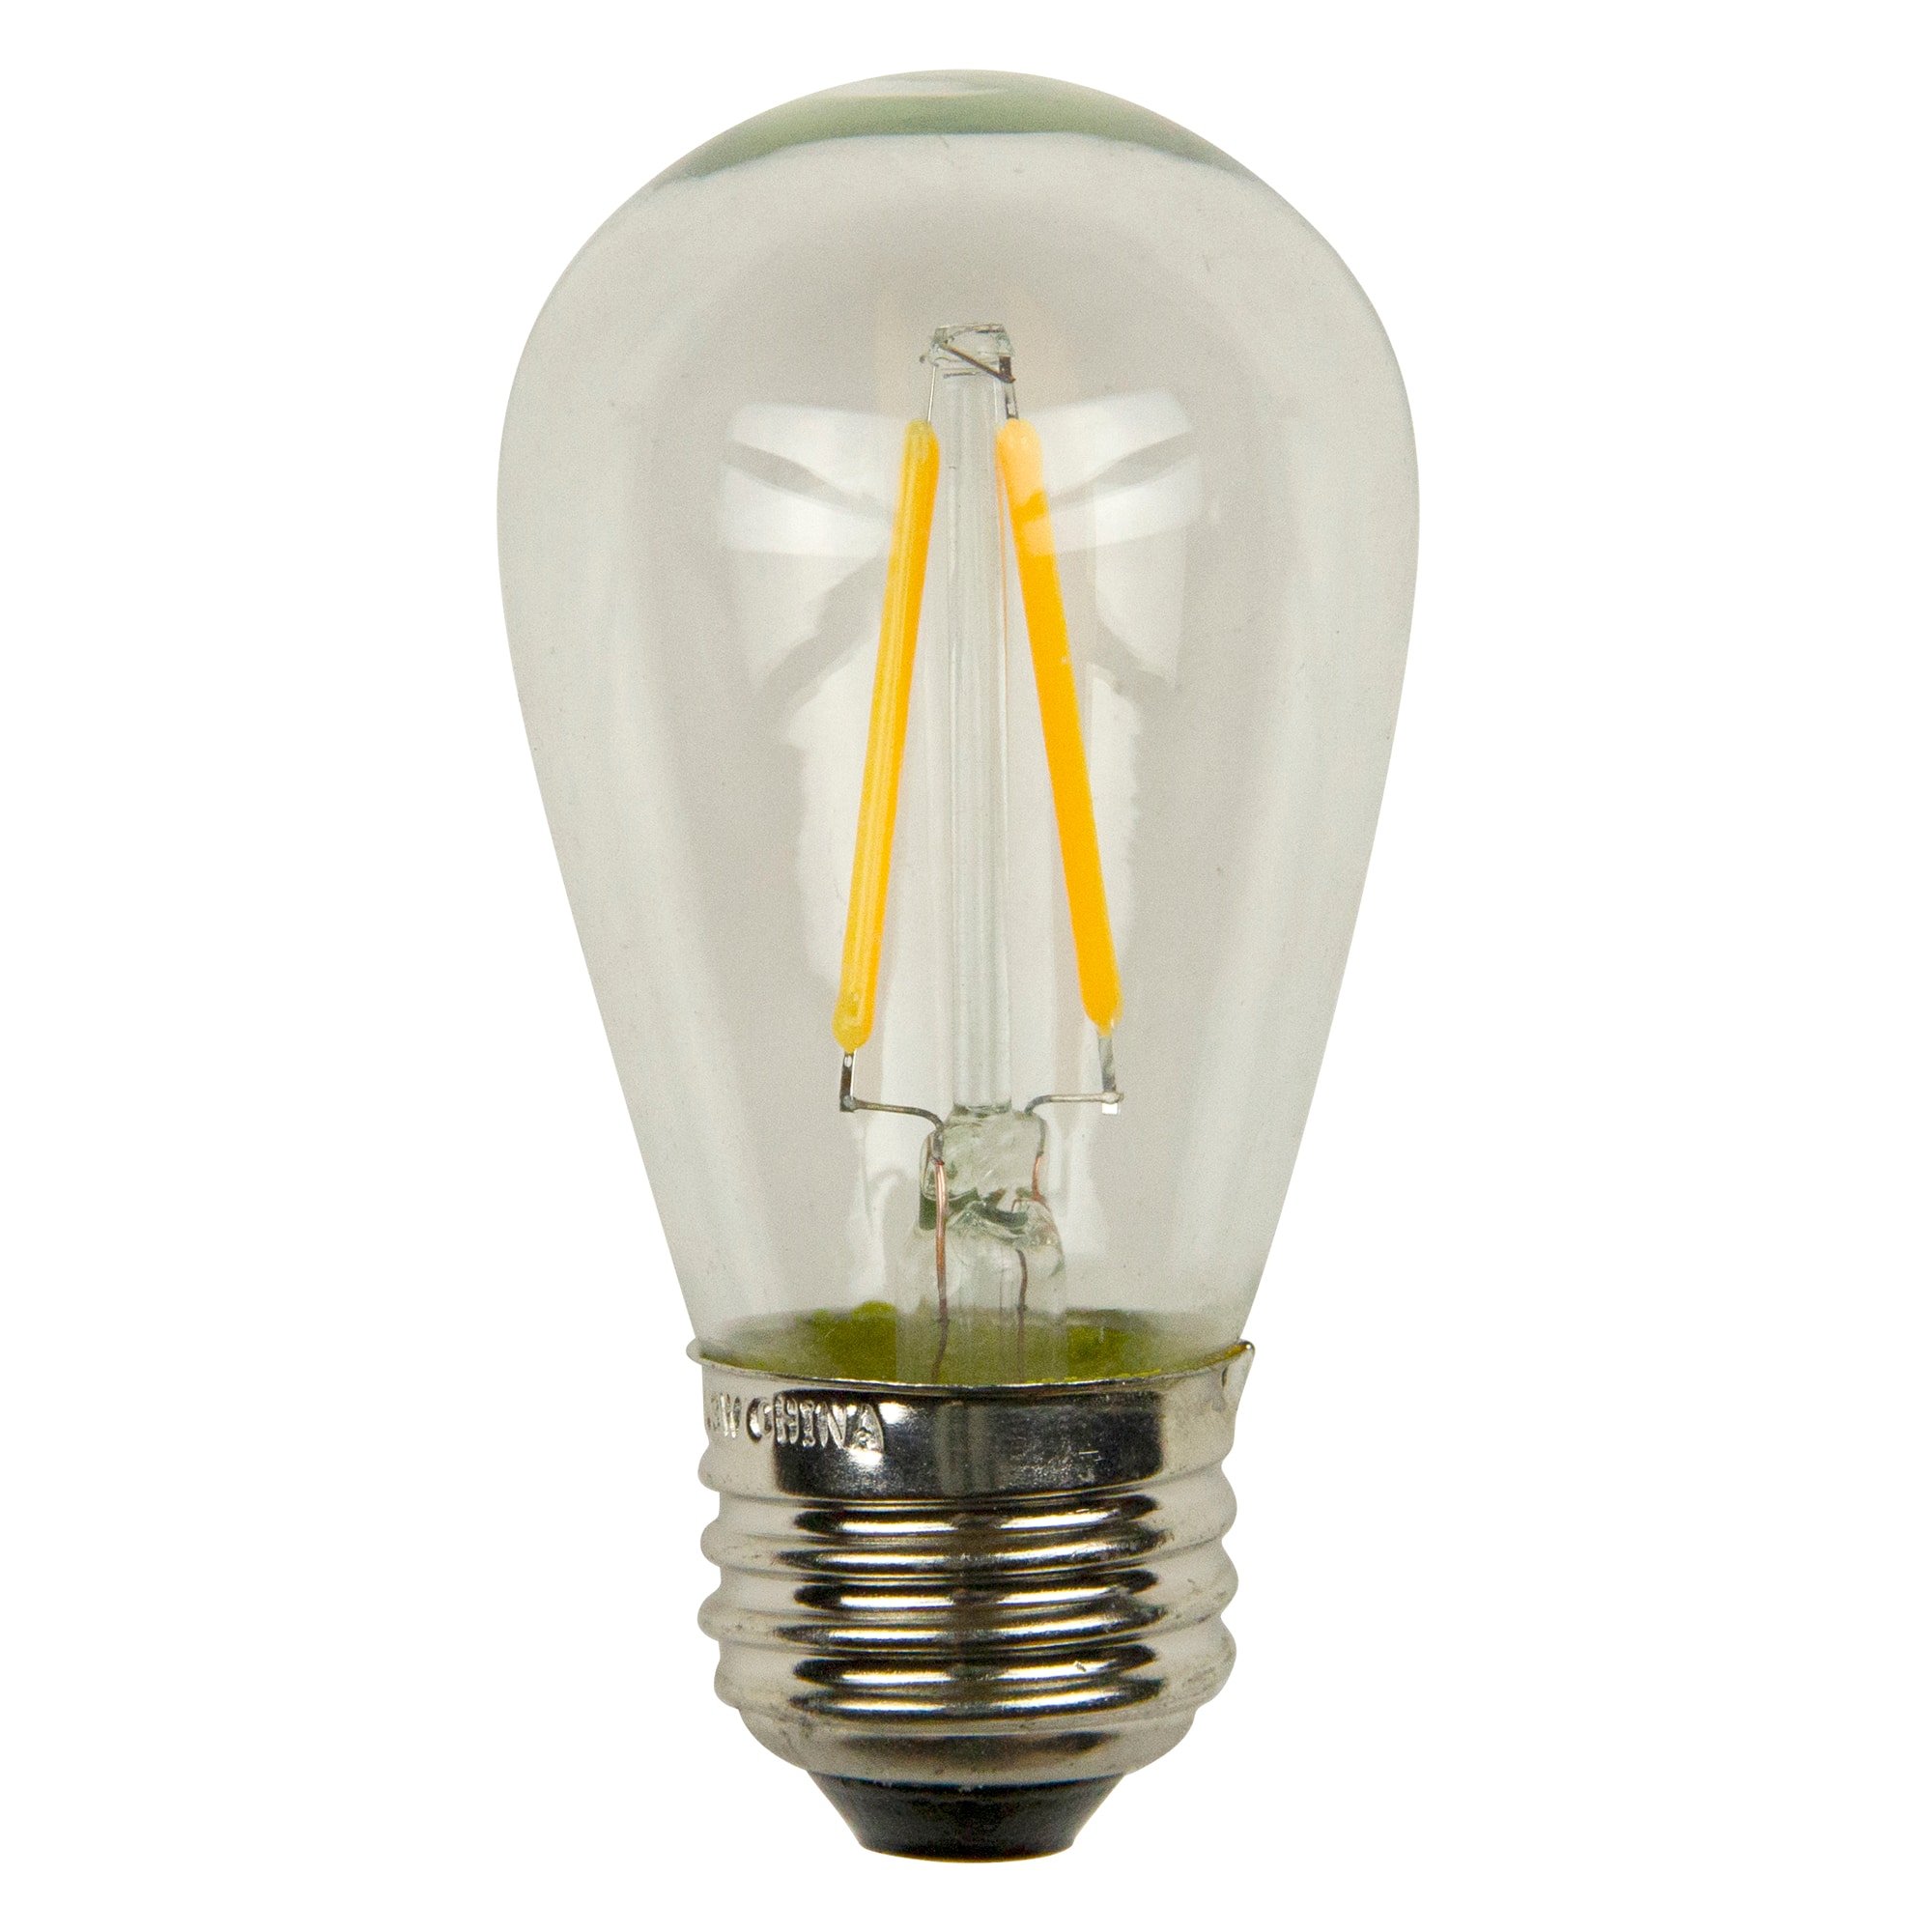 Warm White S14 Vintage Edison Style LED Light Bulbs, 25ct.